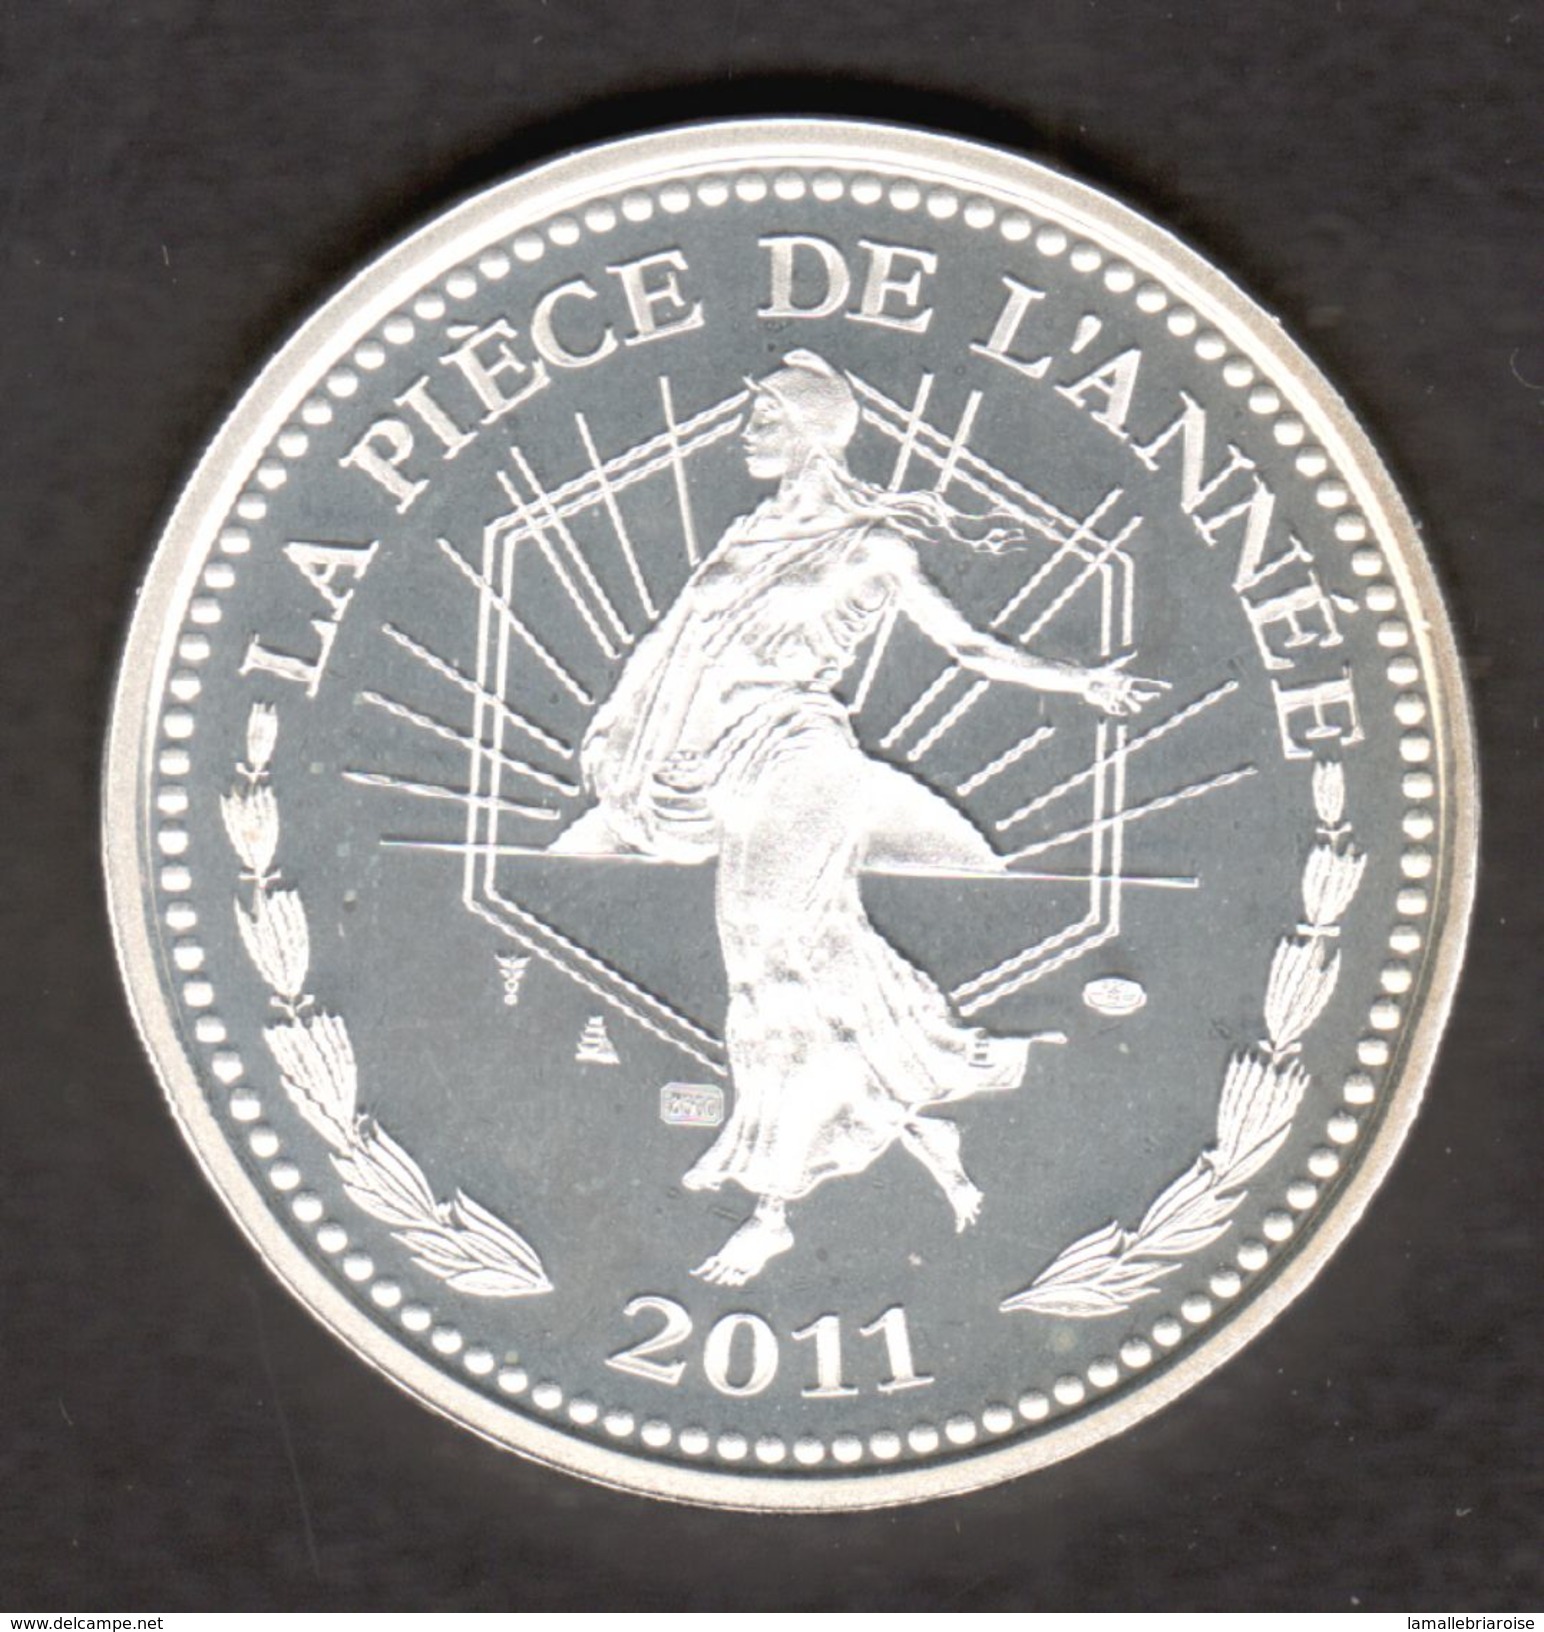 La Piece De L'annee 2011, IN MEMORIAM, Notre Dame De Reims, Marie Curie, TGV, Argent 900/00 - Non Classificati